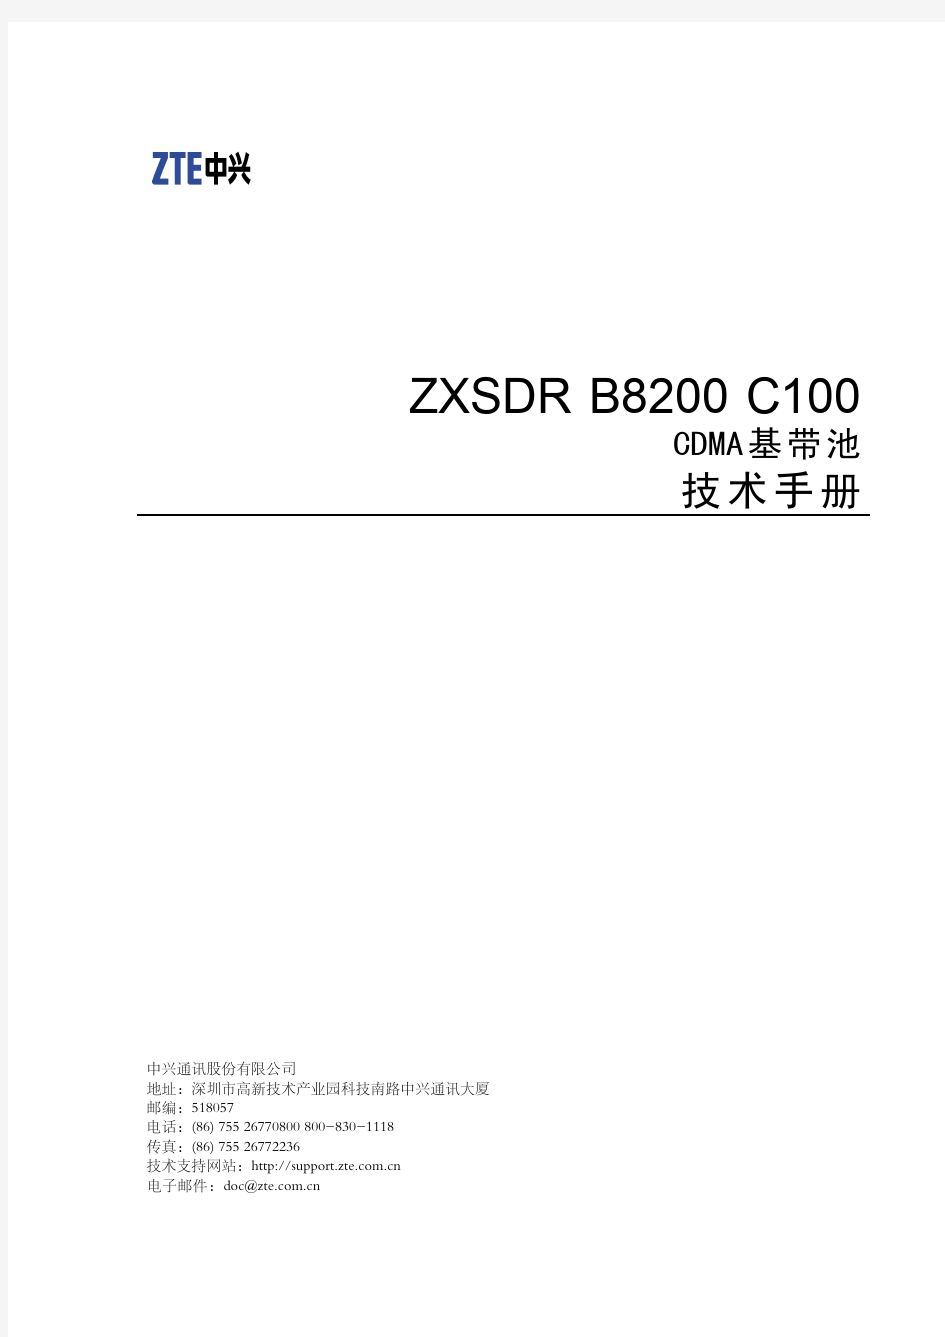 sjzl20081074555-ZXSDR B8200 C100 CDMA基带池技术手册